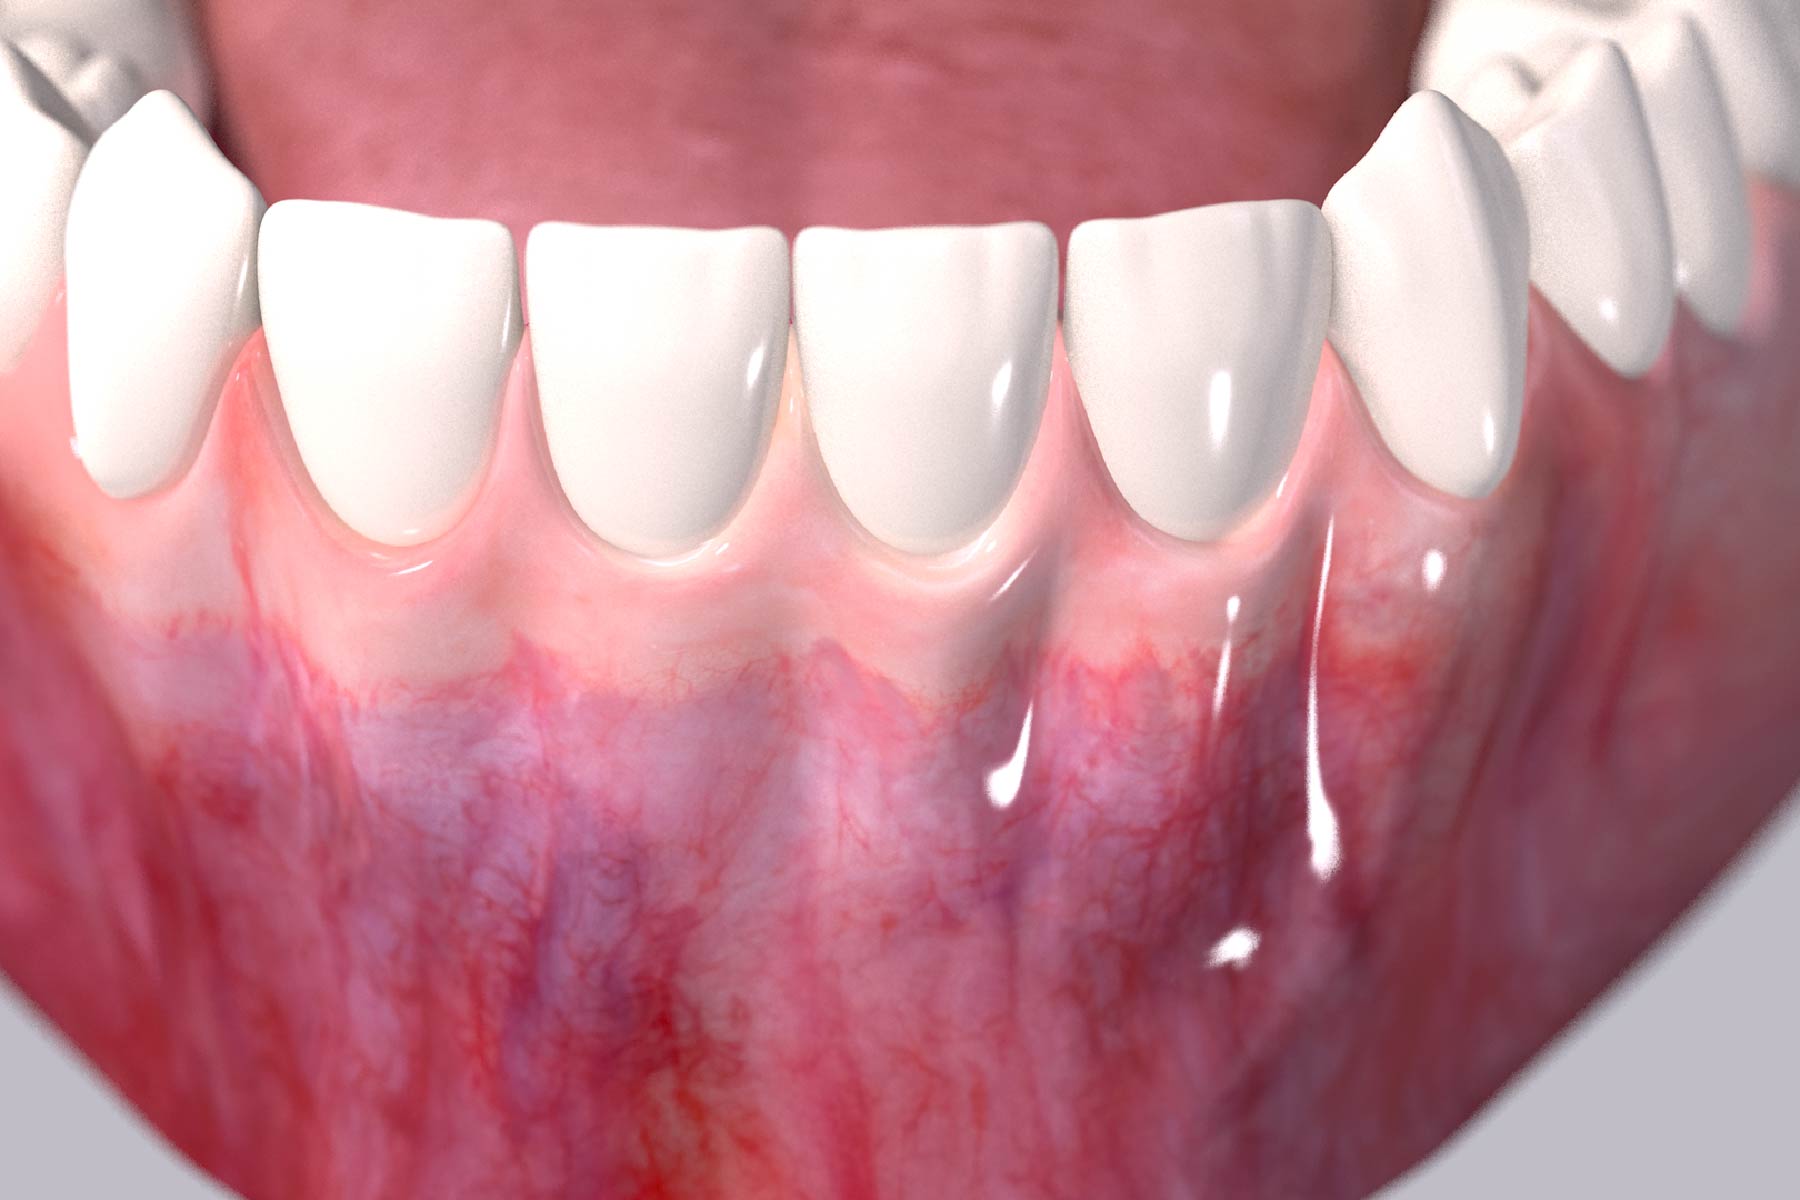 3D rendering of healthy gum tissue